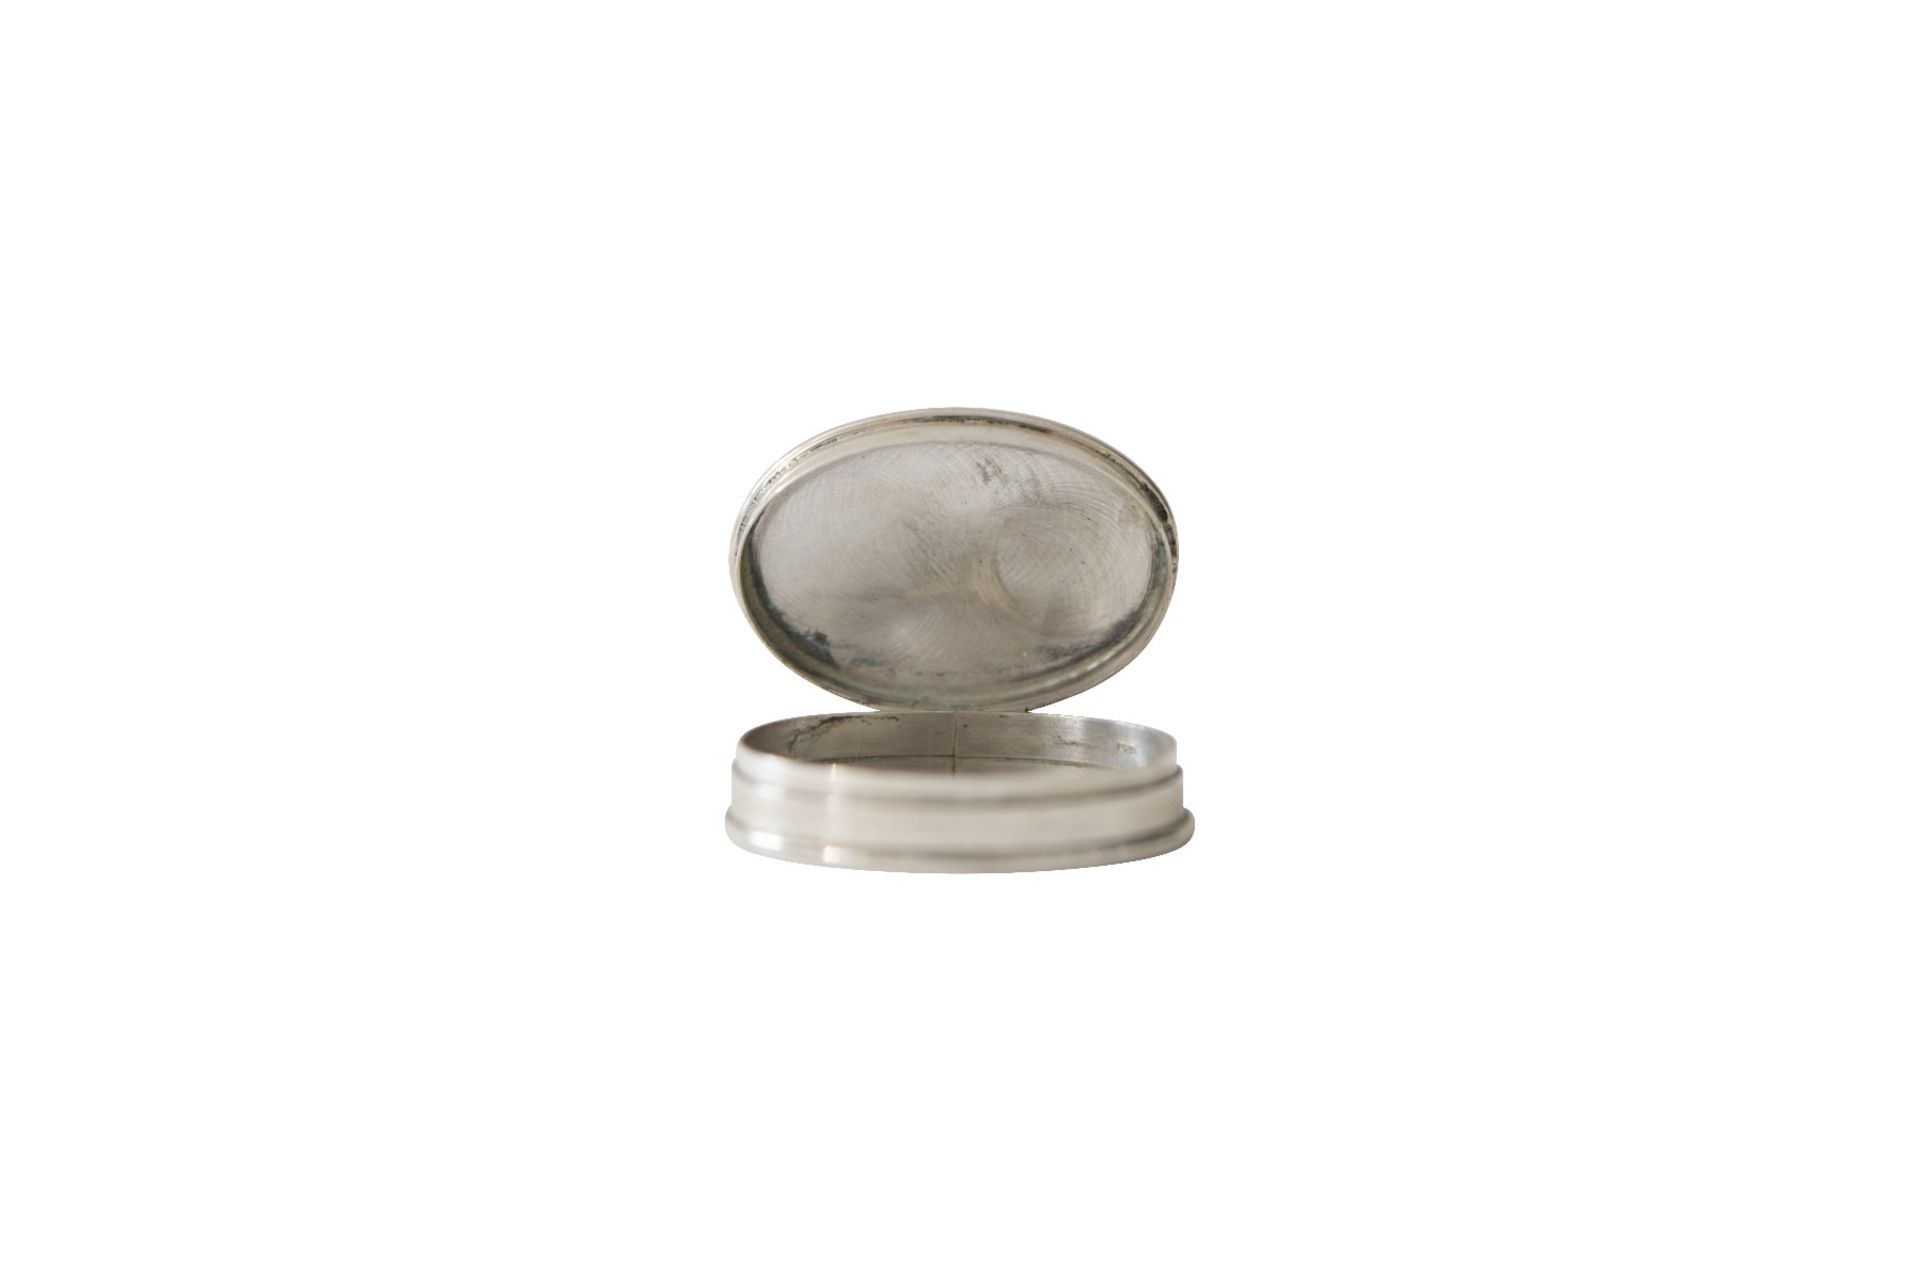 Pill Box silver 925/000 fein - Image 3 of 5